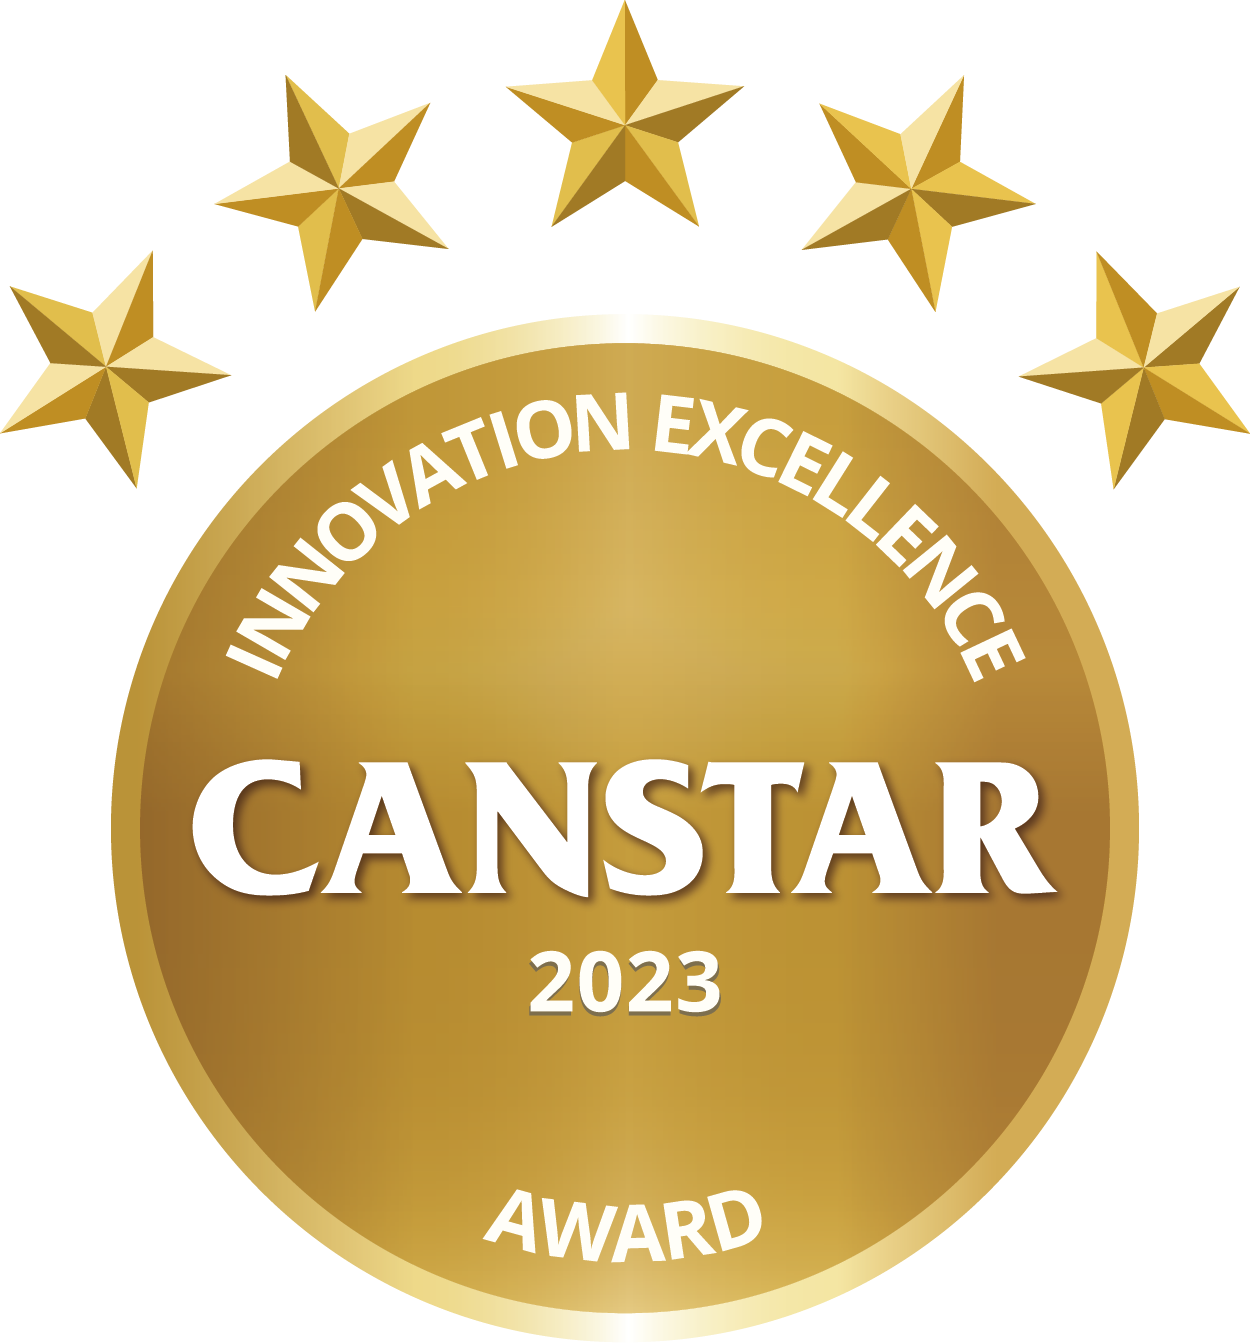 Canstar Innovation Excellence 2023 award logo